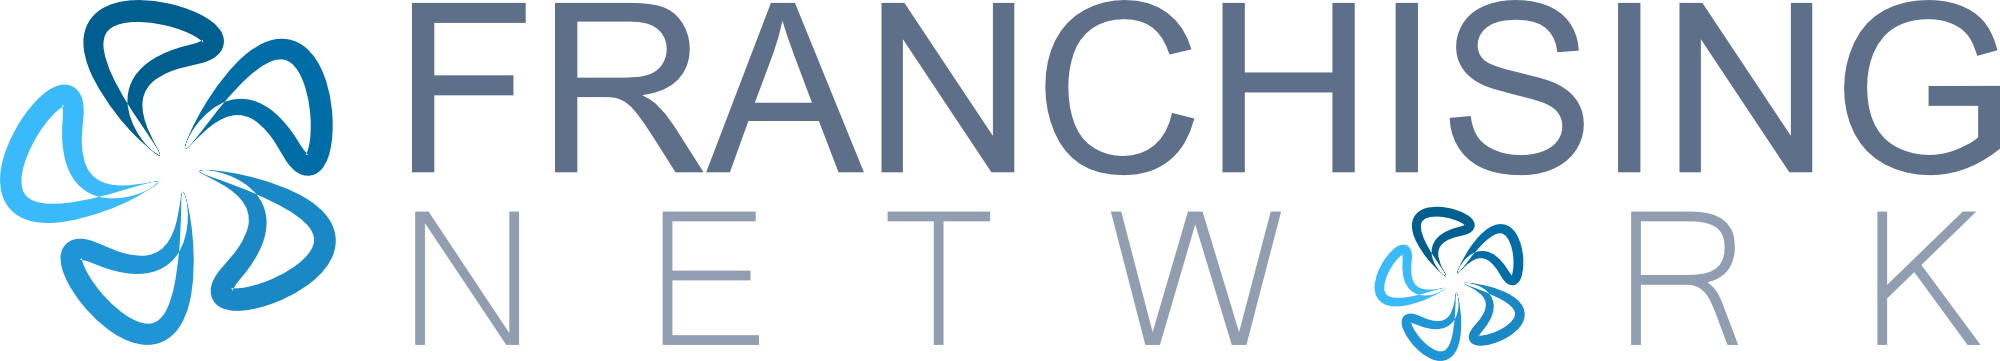 franchising_network_logo